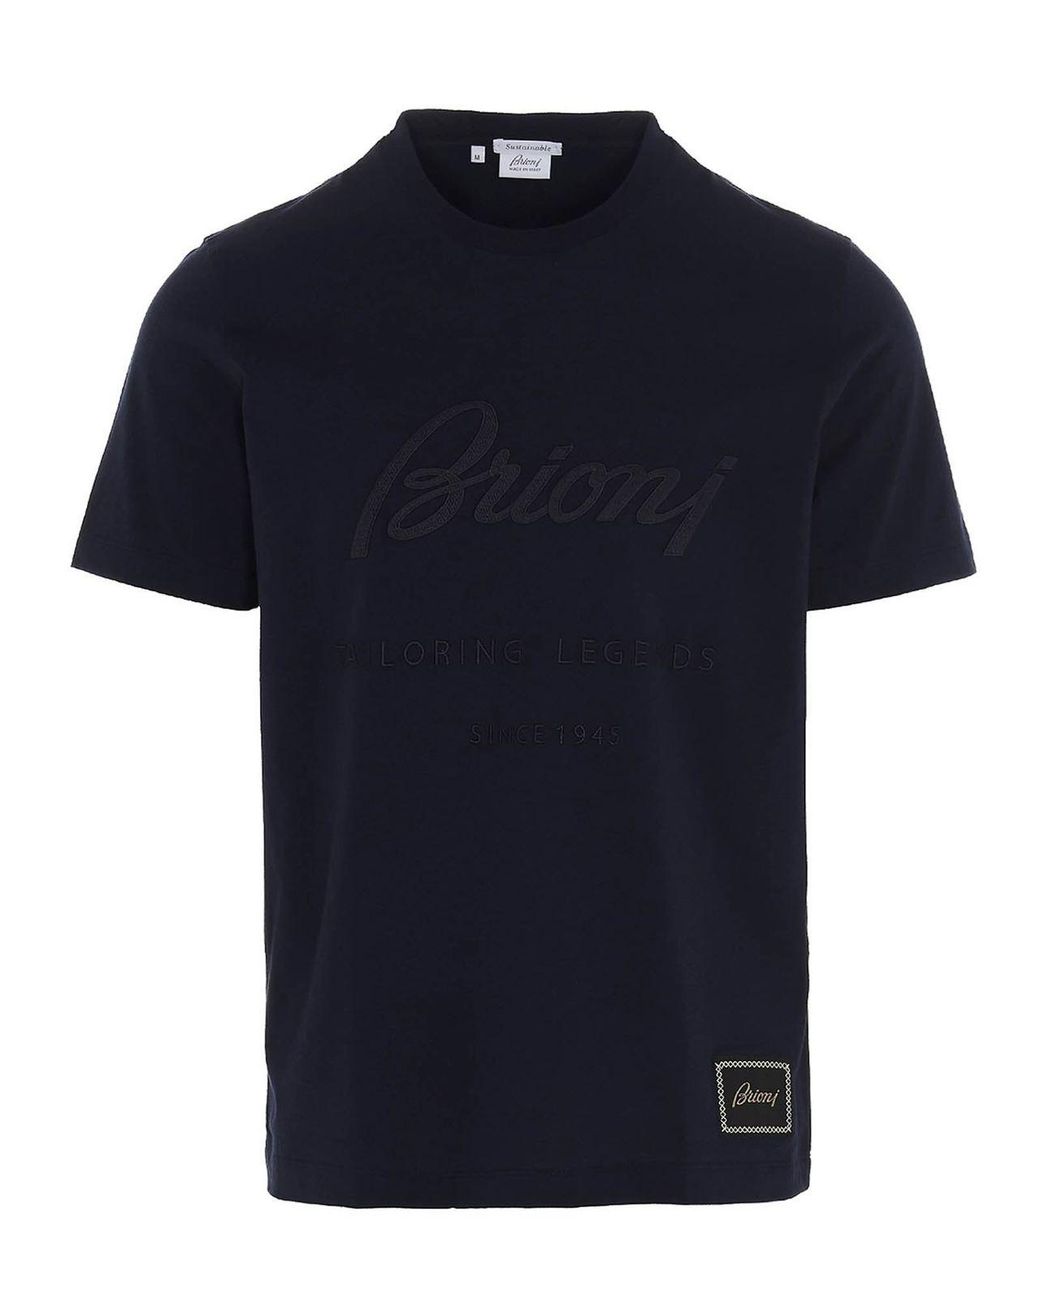 Brioni Cotton Tailoring Legend T-shirt in Blue for Men - Lyst